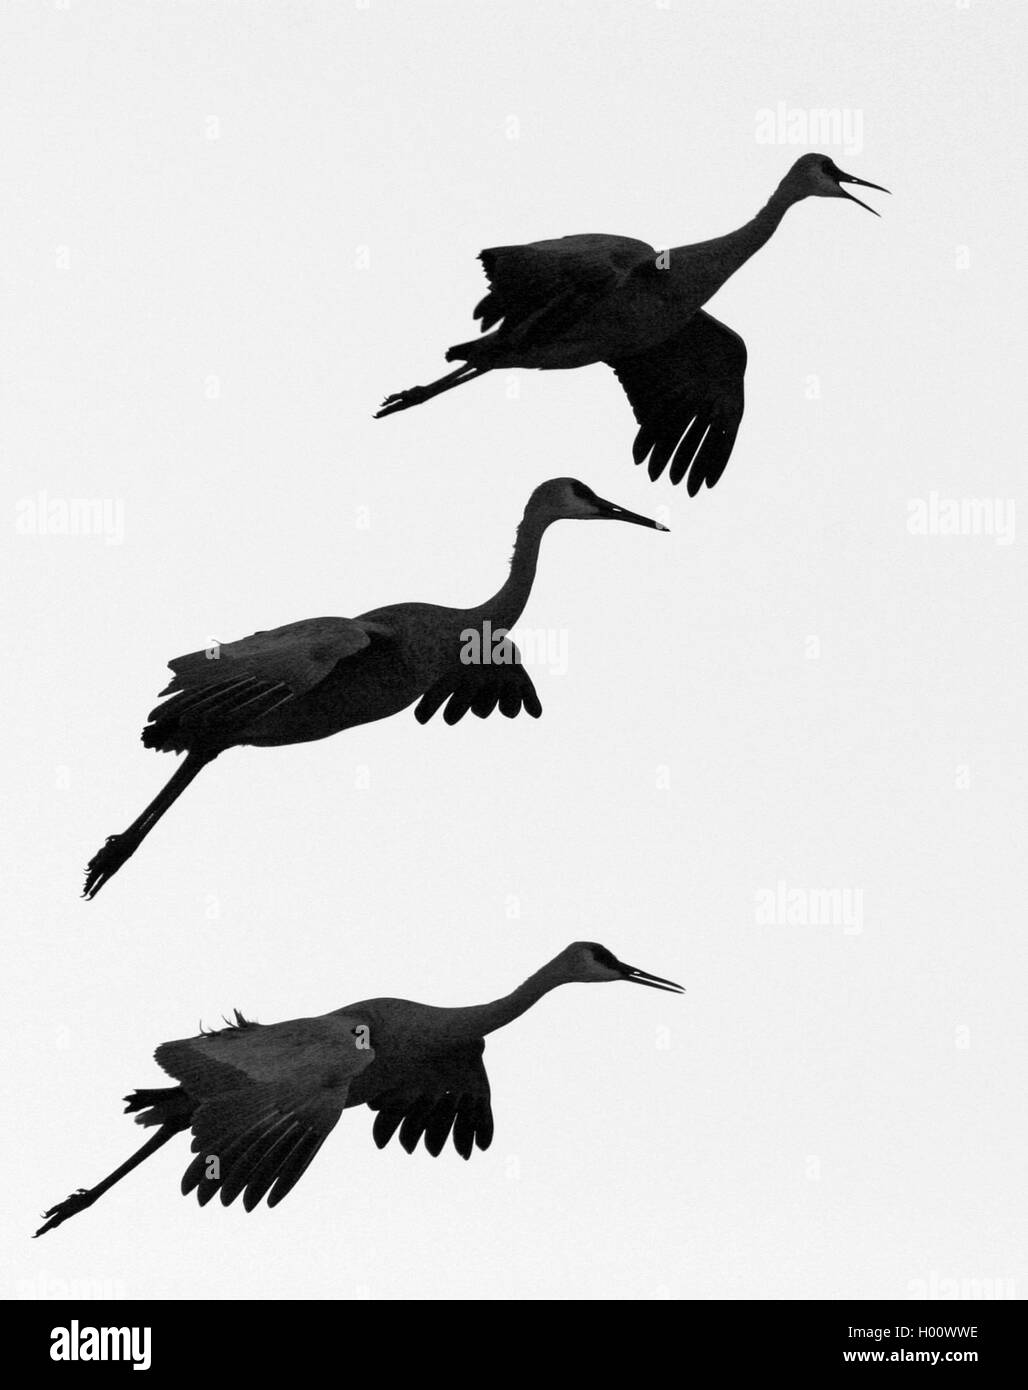 sandhill crane (Grus canadensis), silhouette of three flying sandhill cranes, USA, New Mexico Stock Photo